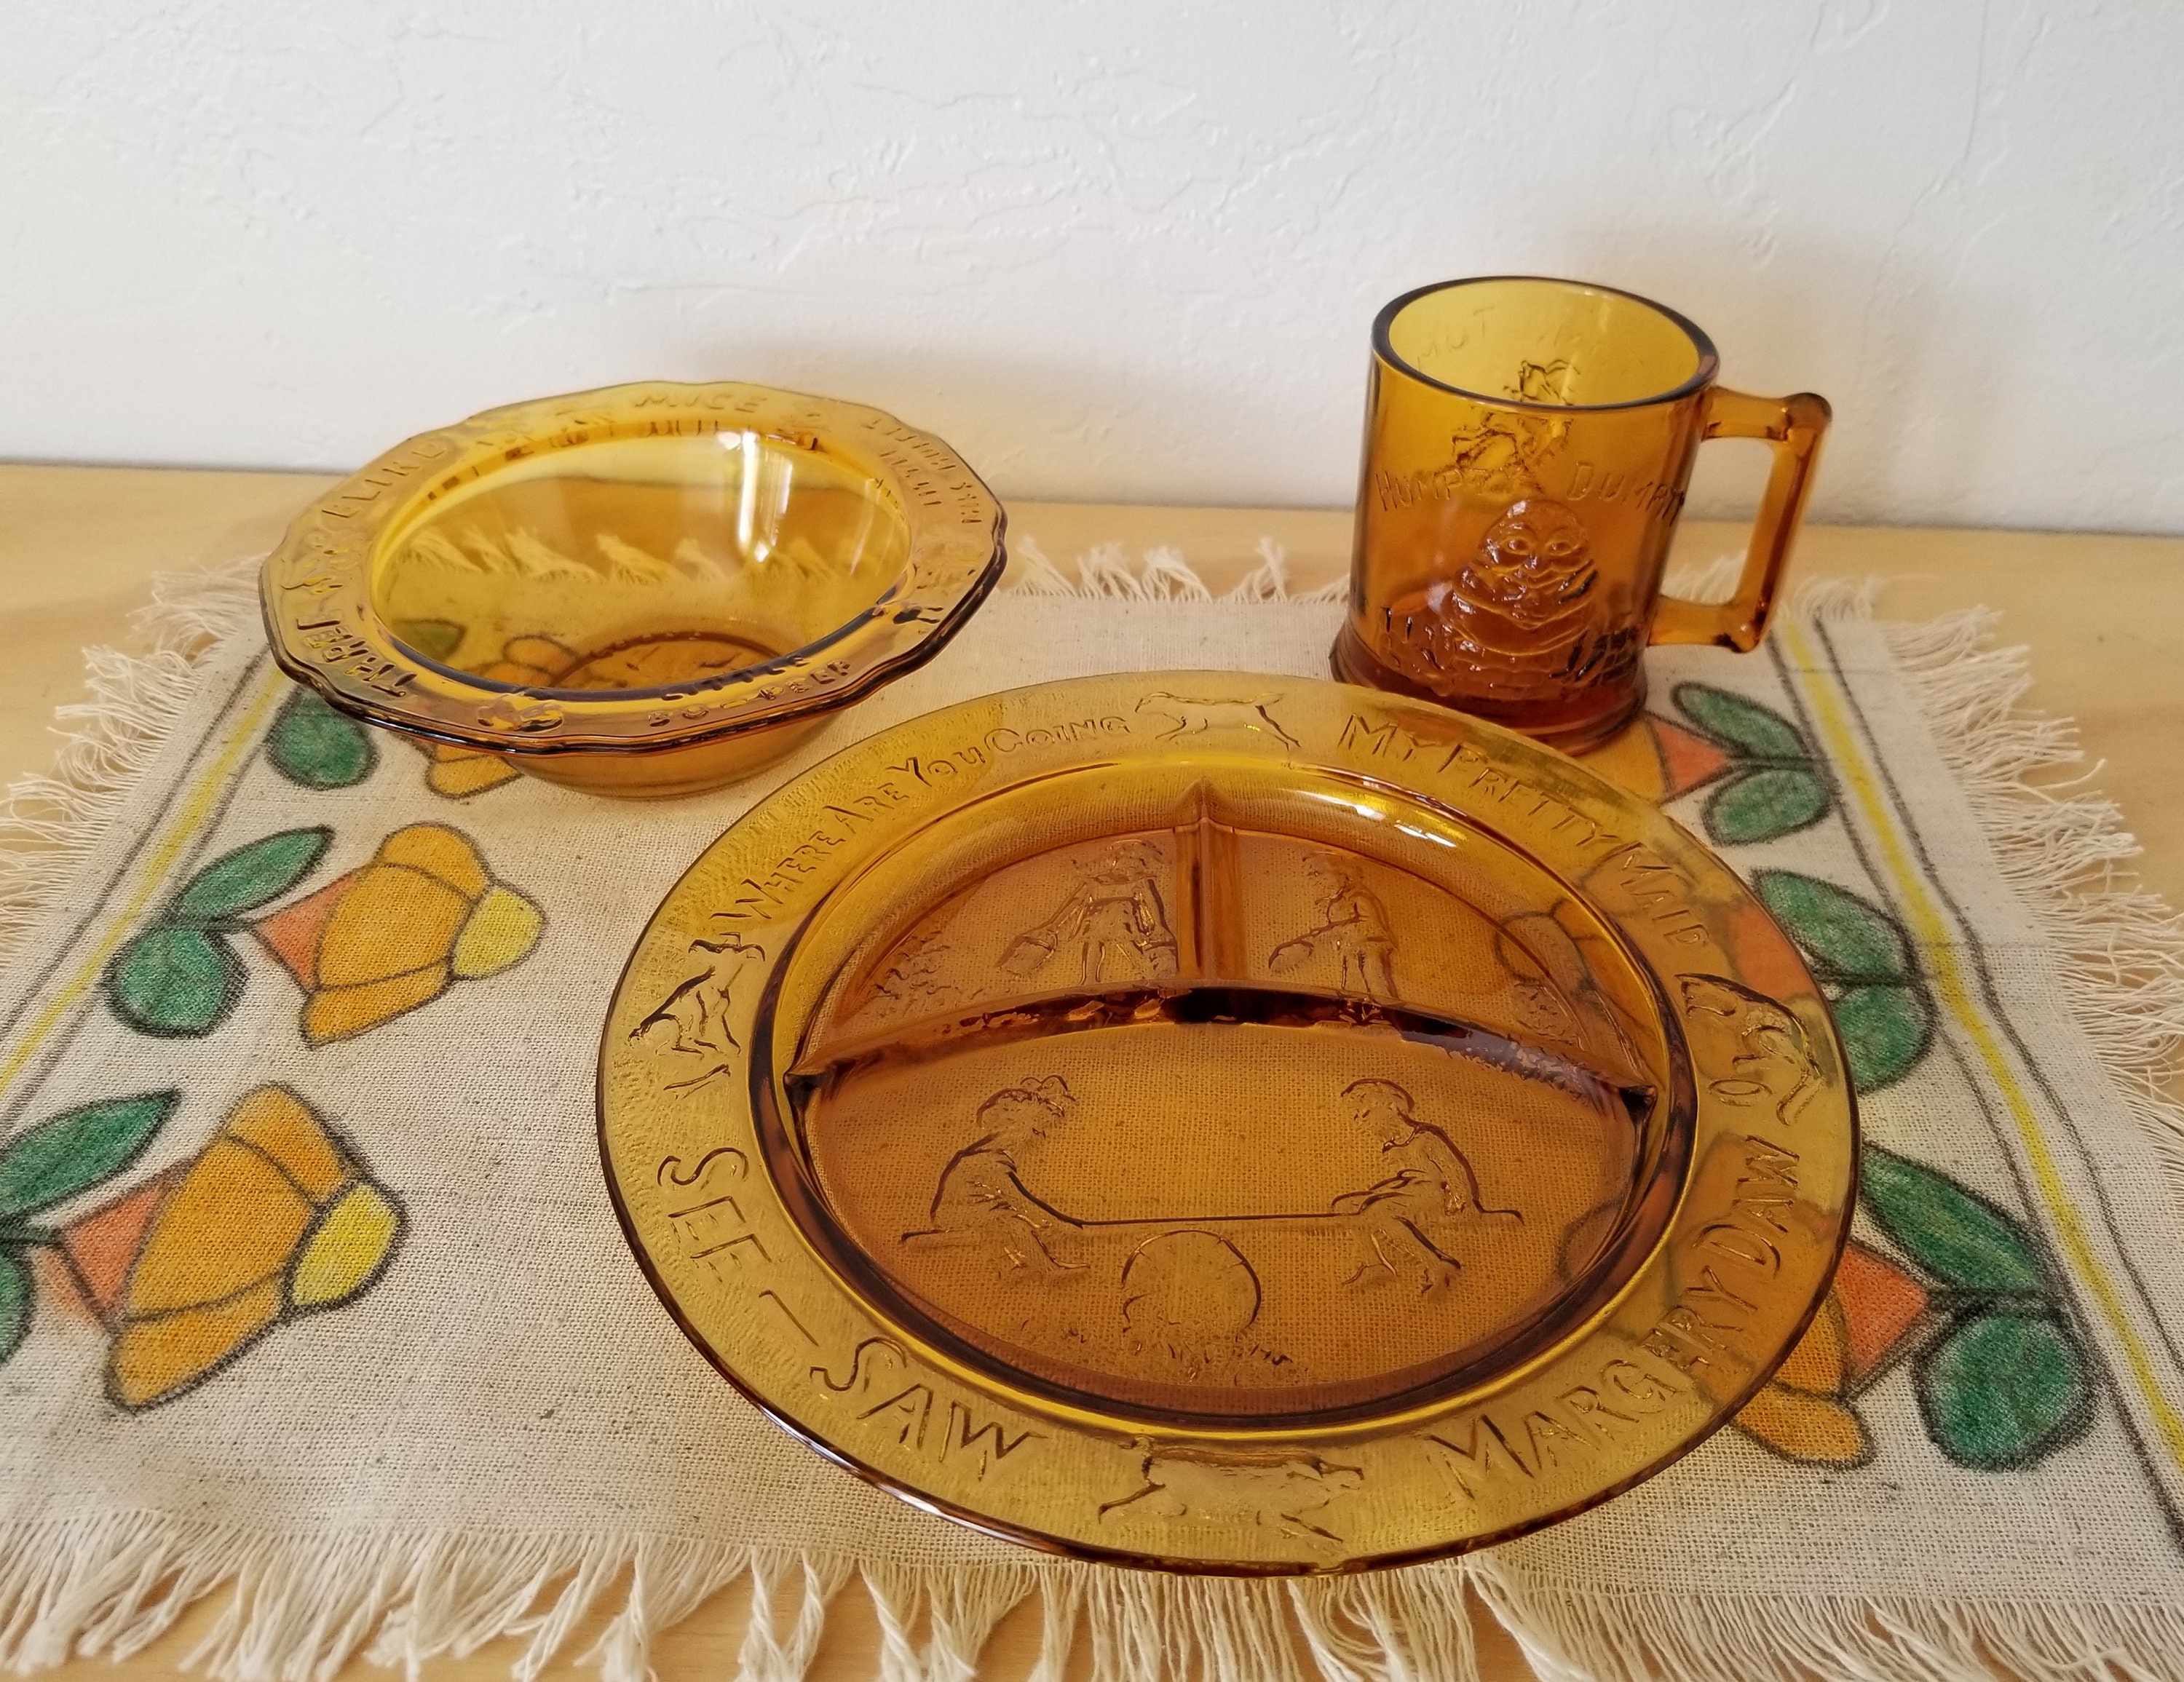 6 Indiana Glass Company Amber Glass Tea Cups / Tiara Sandwich Amber Tea Cups  / Thick Amber Glass Mugs / Vintage Tea Cup Set / Boho Tea Cups -  Norway